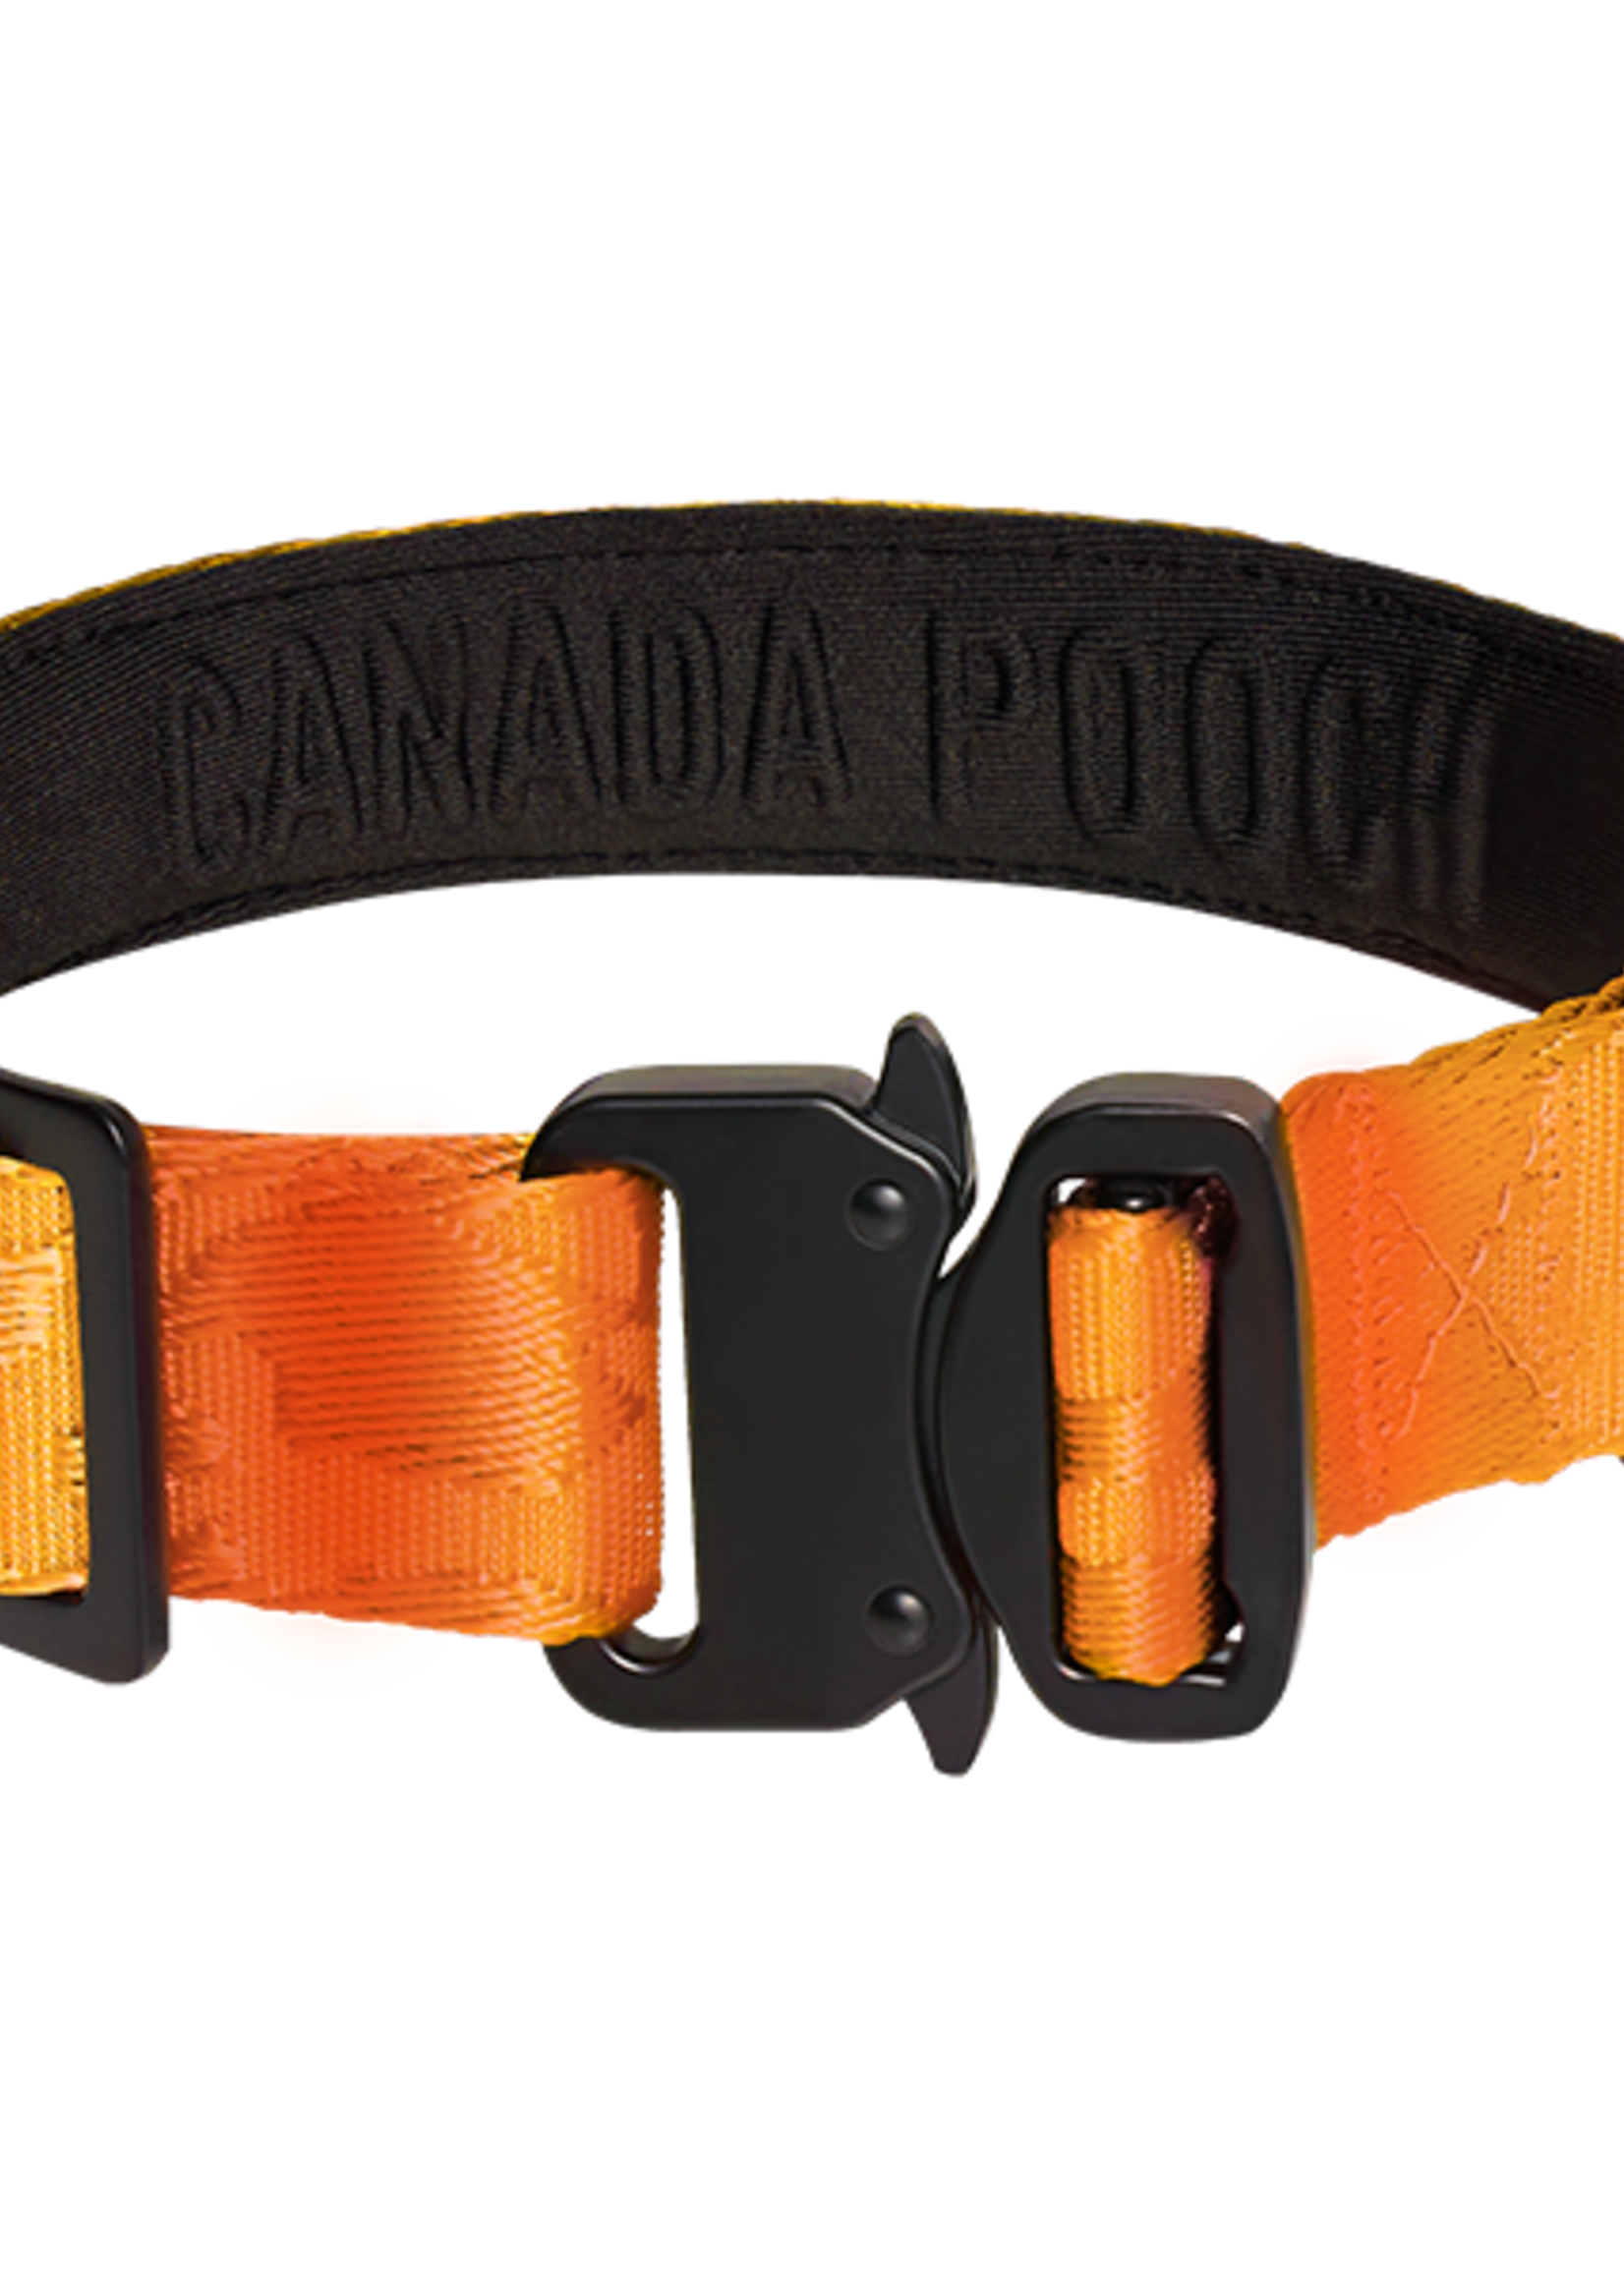 Canada Pooch Core Utility Collar Orange Camo S